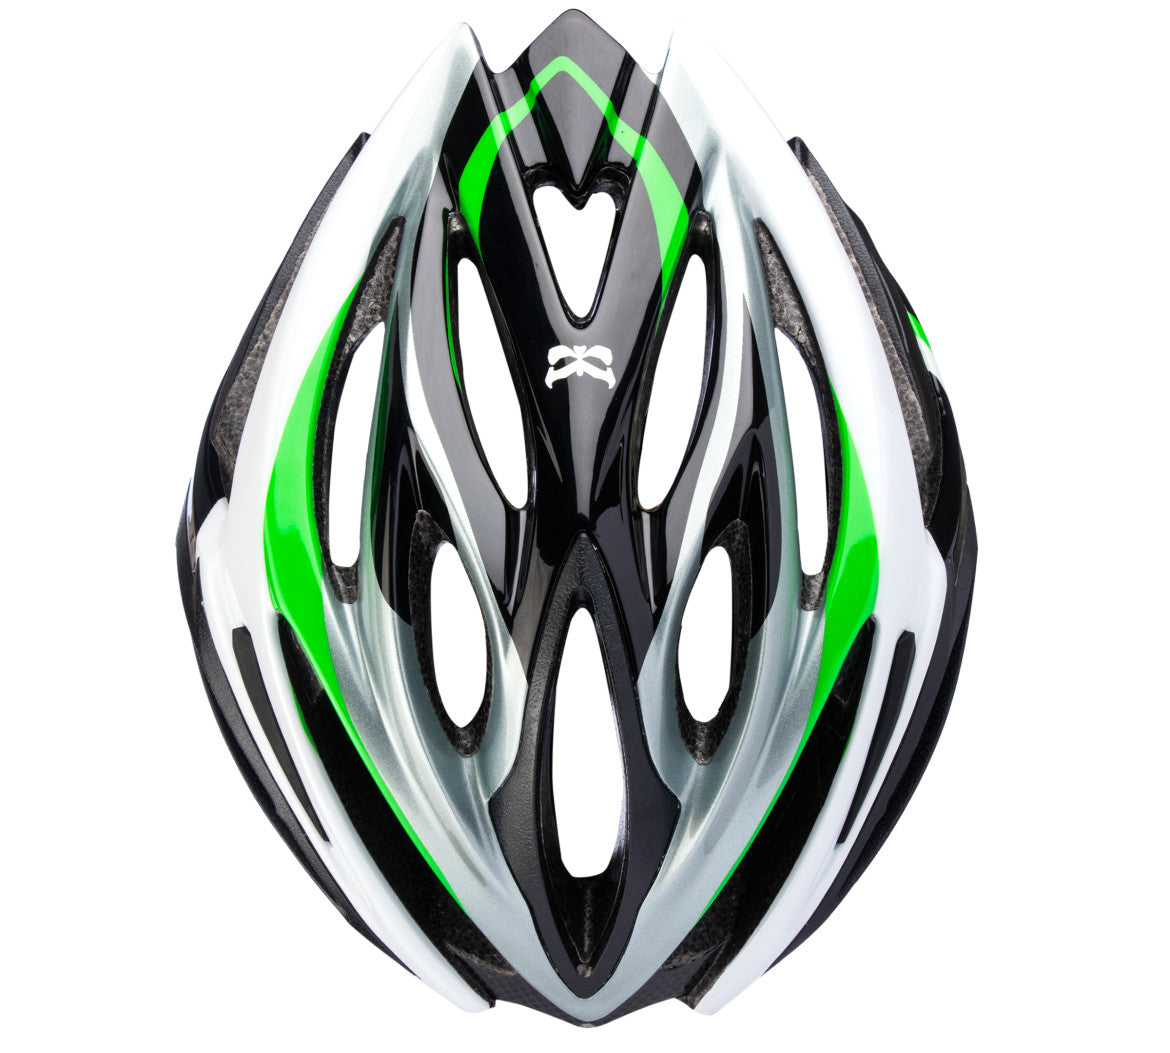 Kali Phenom Wave Road Bike Helmet